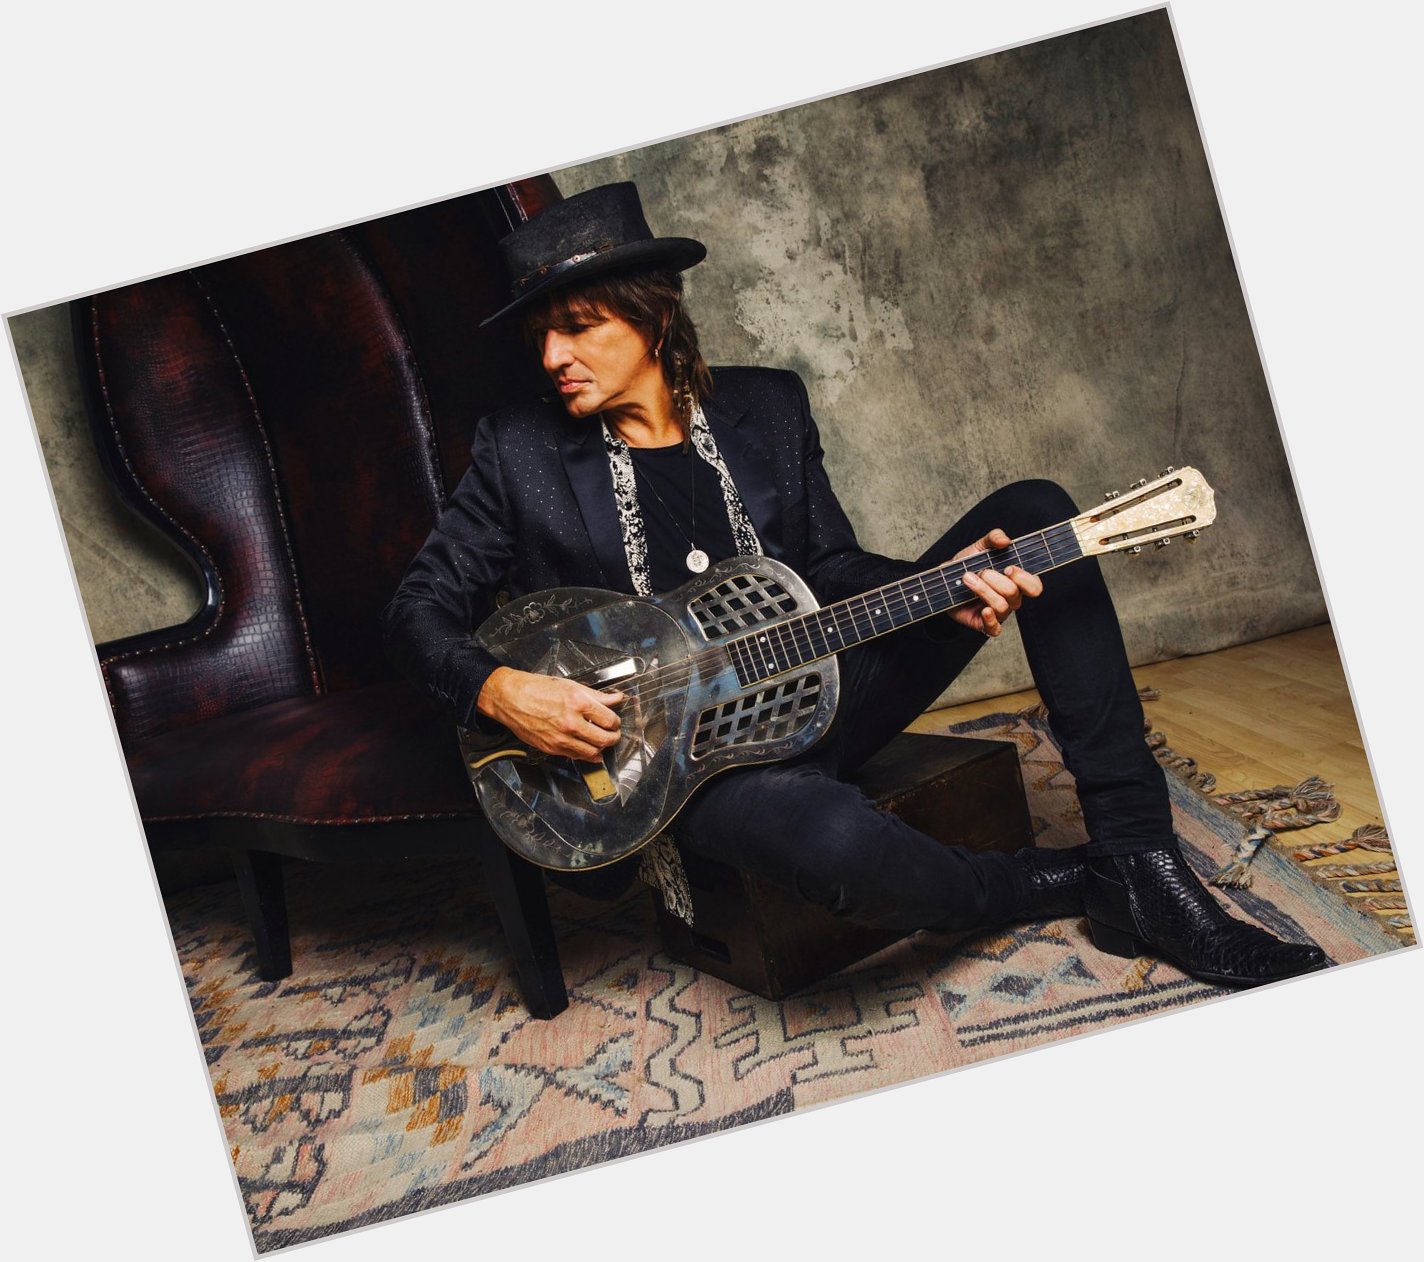 Happy Birthday to Richie Sambora, guitarist and vocalist for Bon Jovi. 